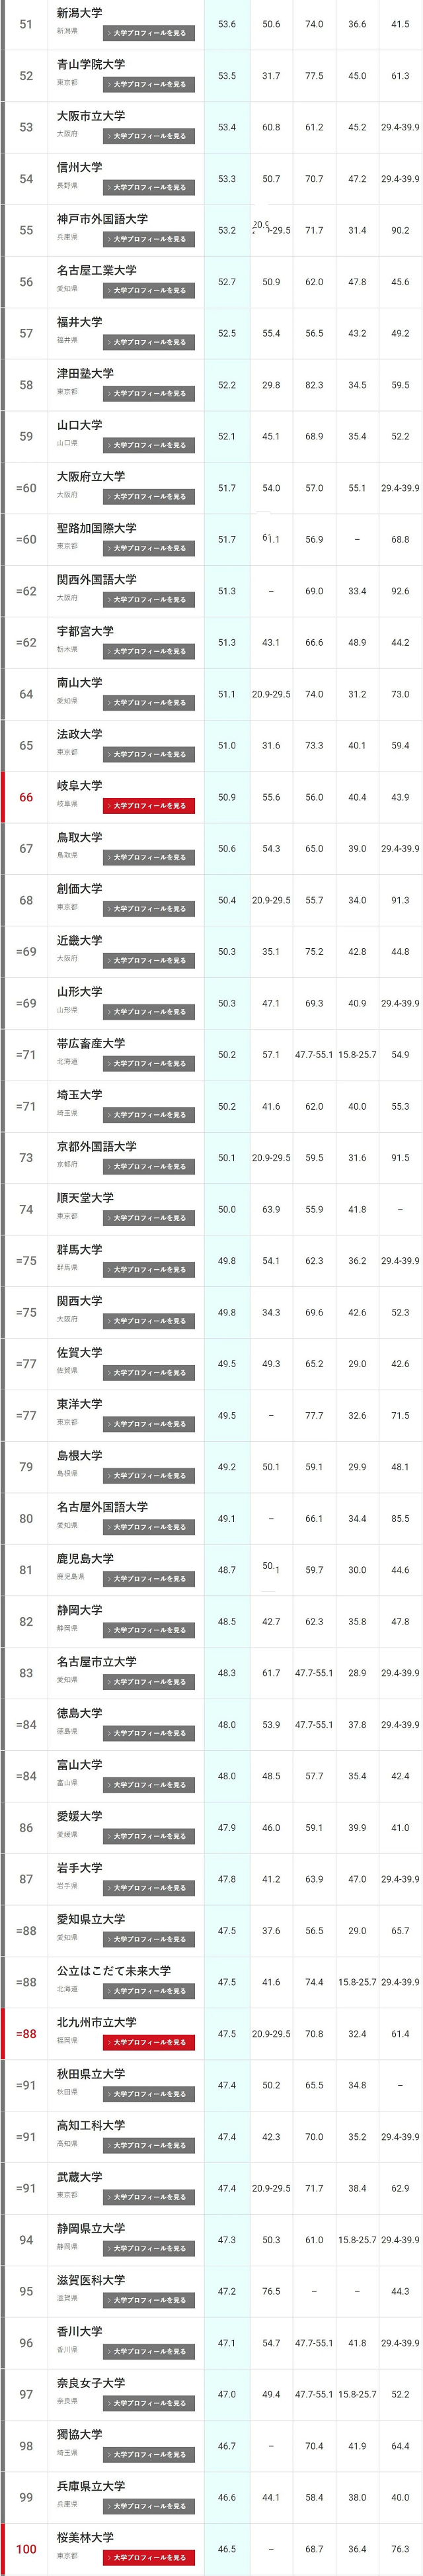 2021THE日本大学排名TOP51-100.jpg